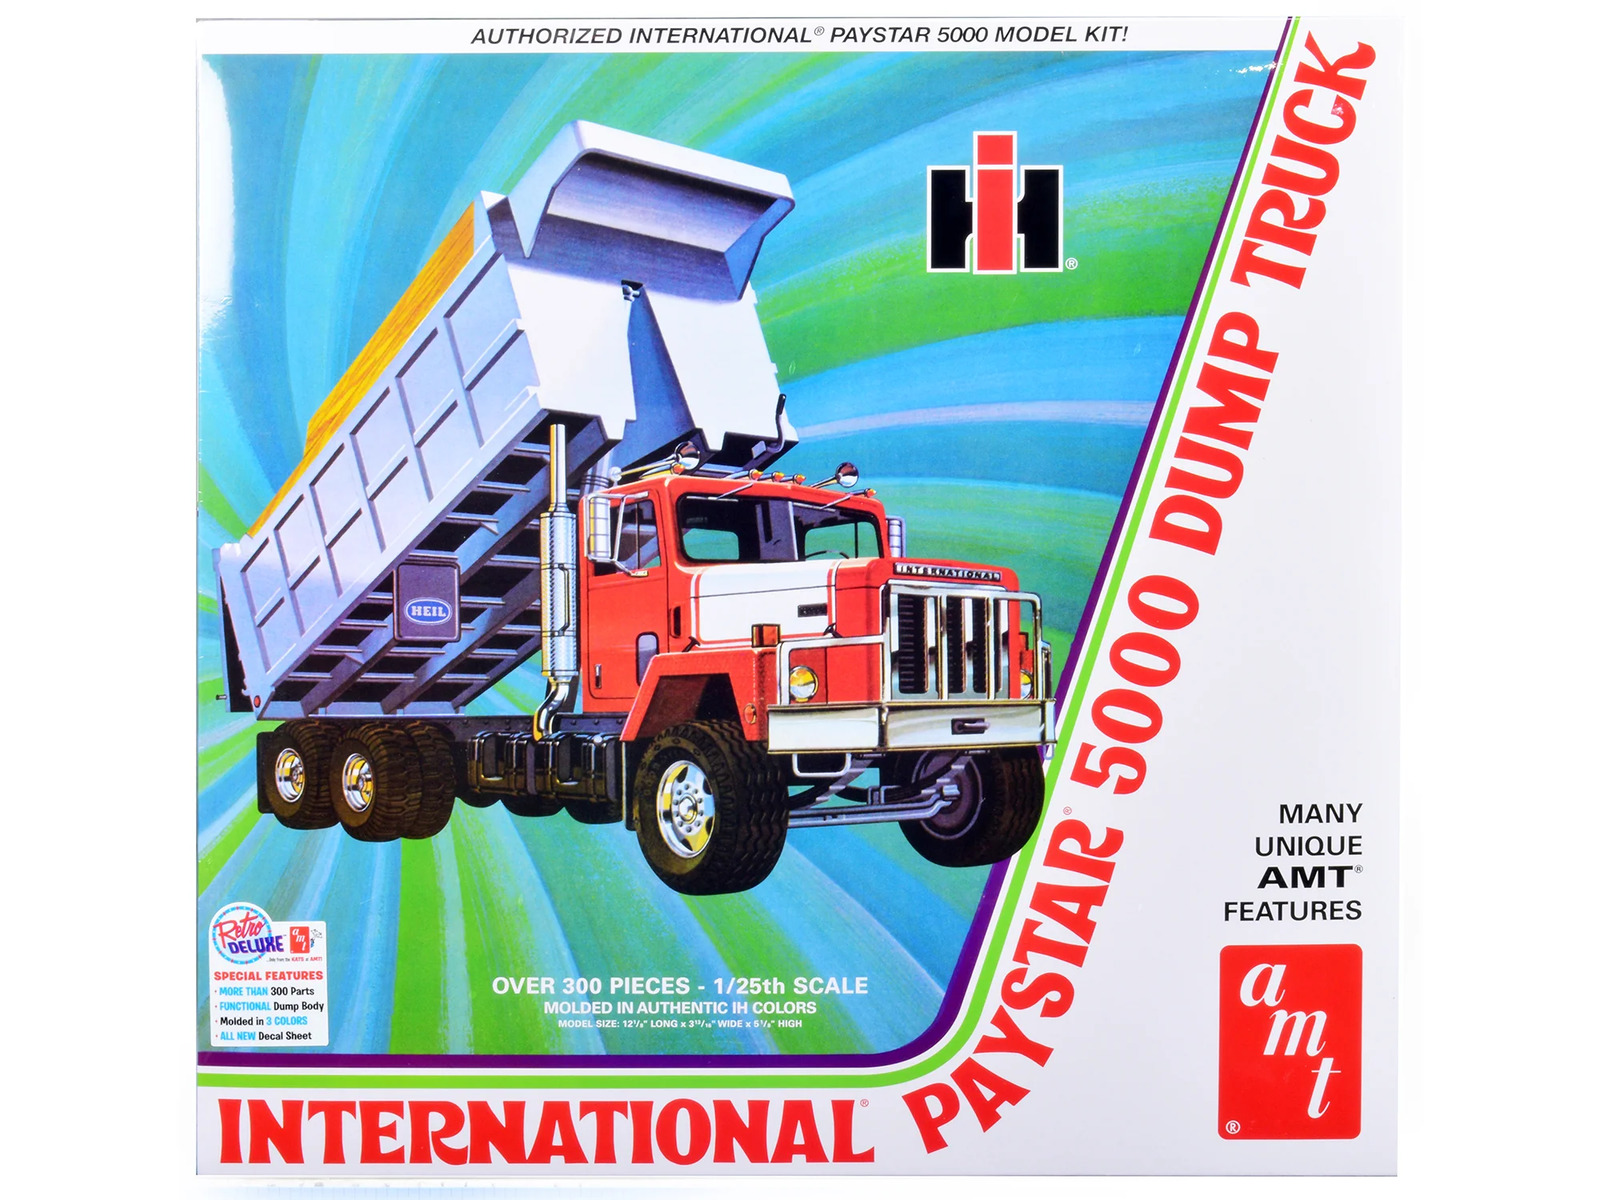 Skill 3 Model Kit International PayStar 5000 Dump Truck 1/25 Scale Model